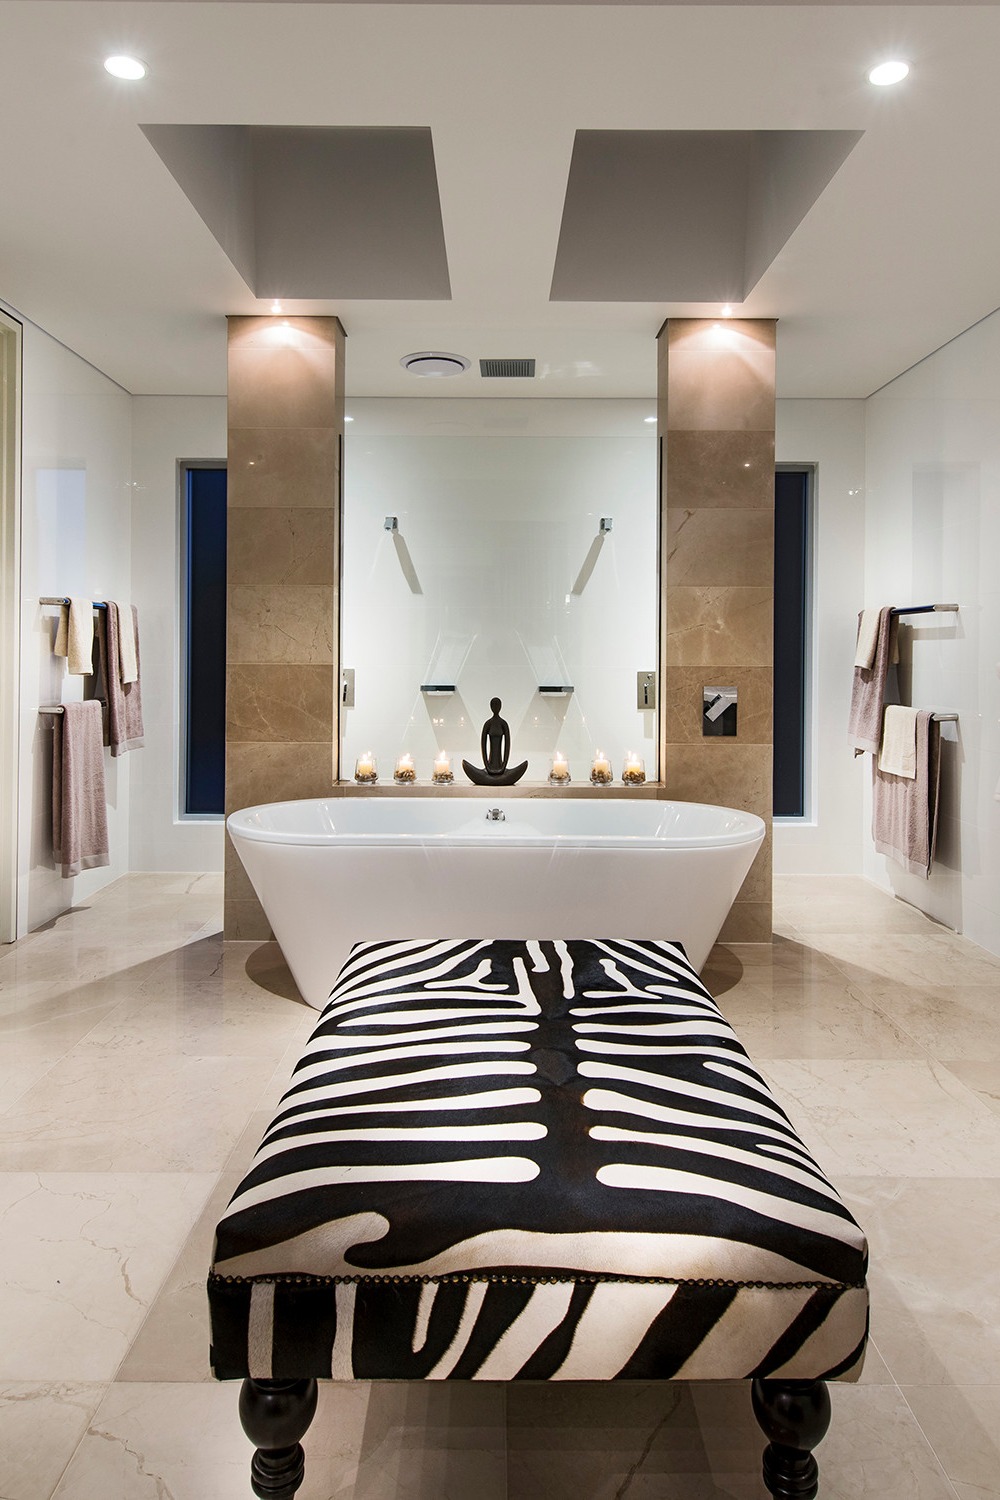 White Walls Tiles Contemporary Bathtub Create Countertop Features Style